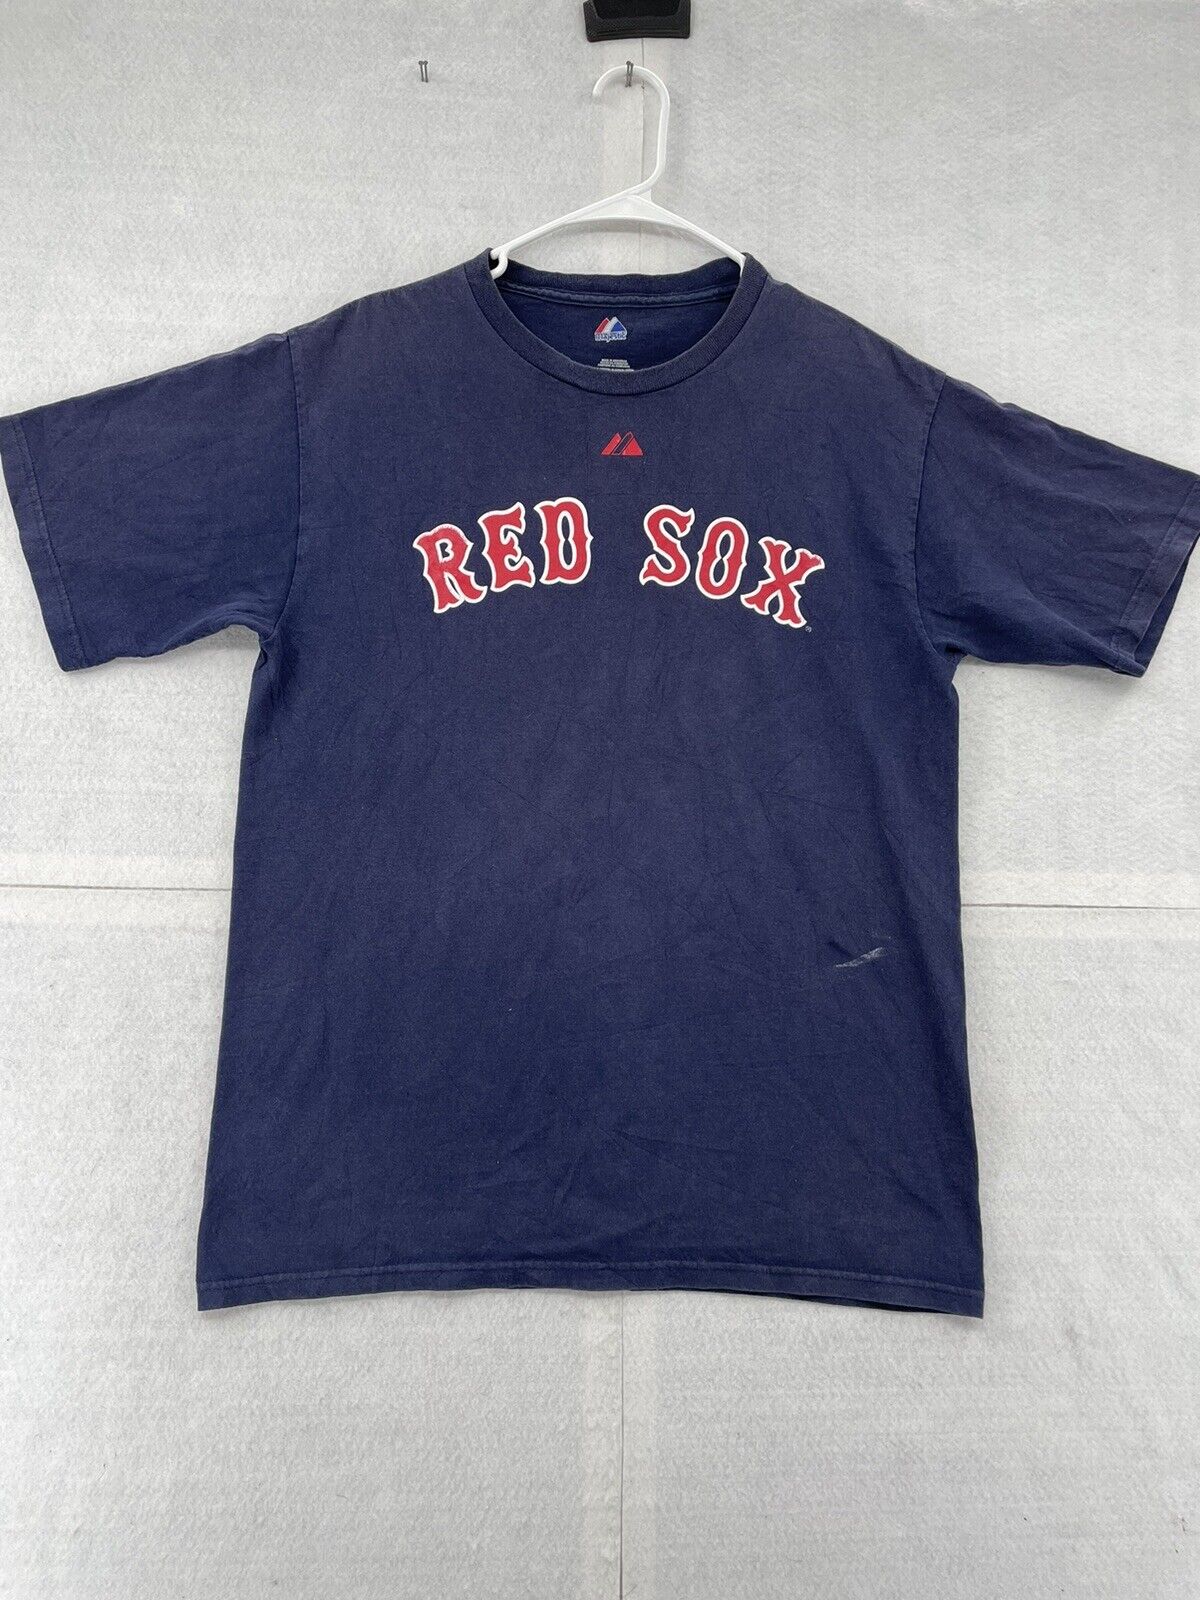 Boston Red Sox Jacoby Ellsbury #46 Shirt Adult Medium Navy Blue MLB Baseball Men